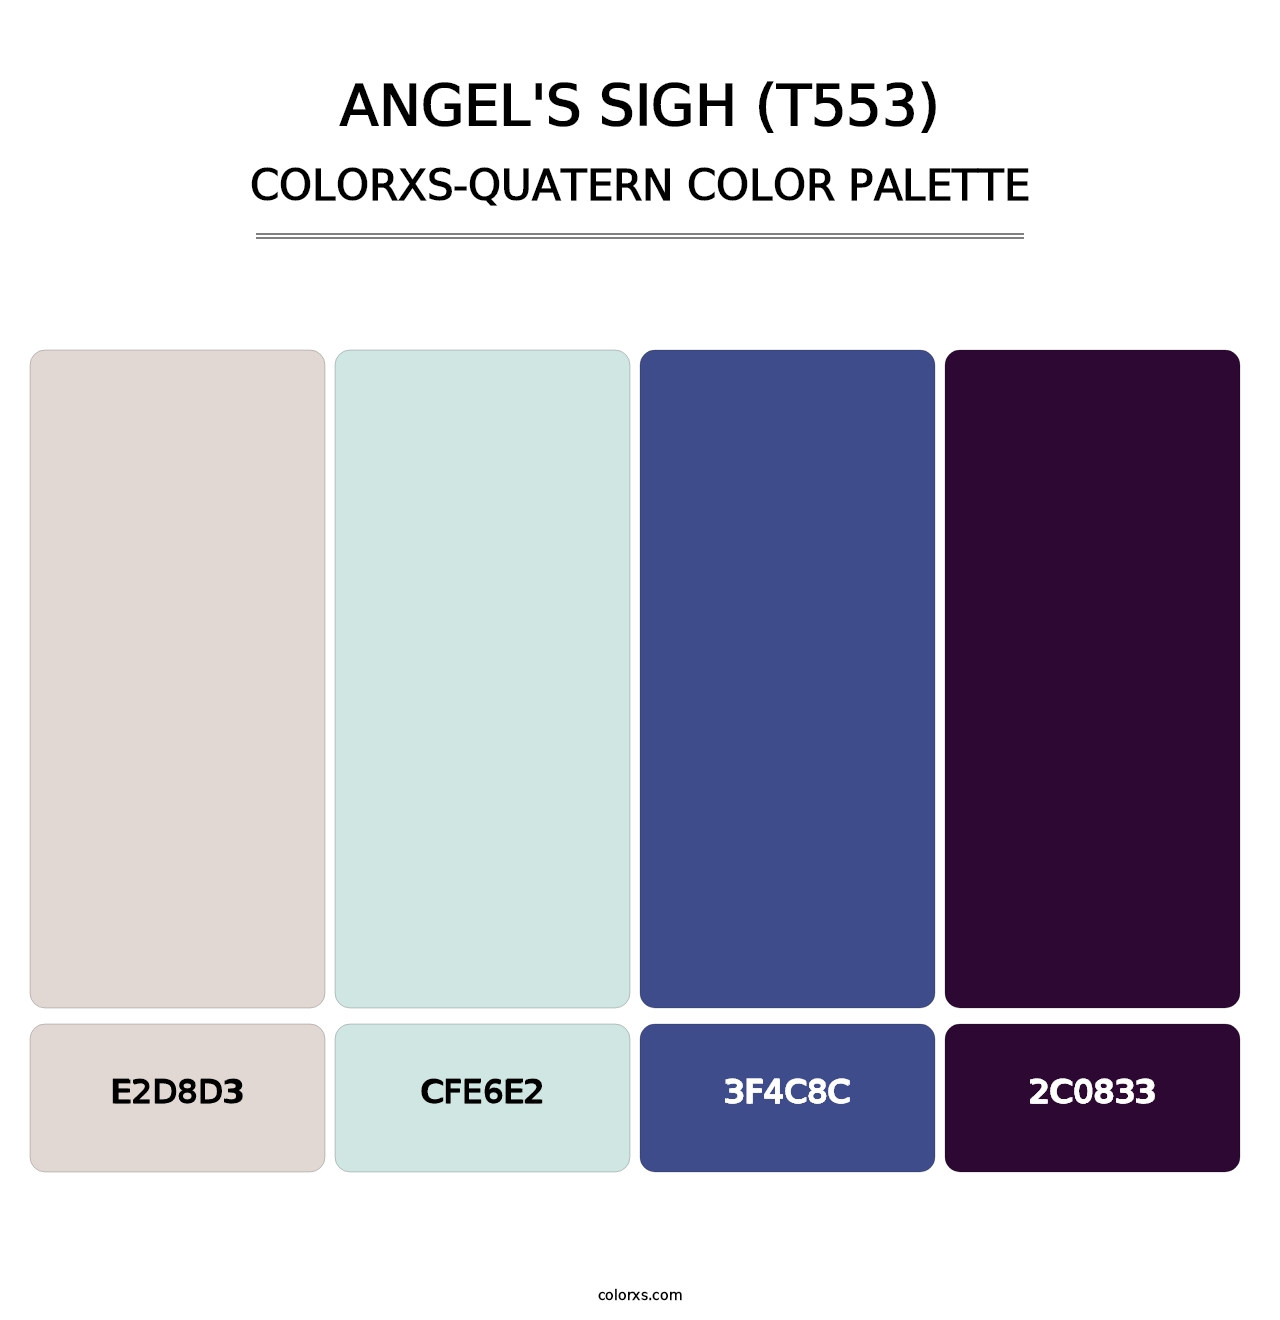 Angel's Sigh (T553) - Colorxs Quatern Palette